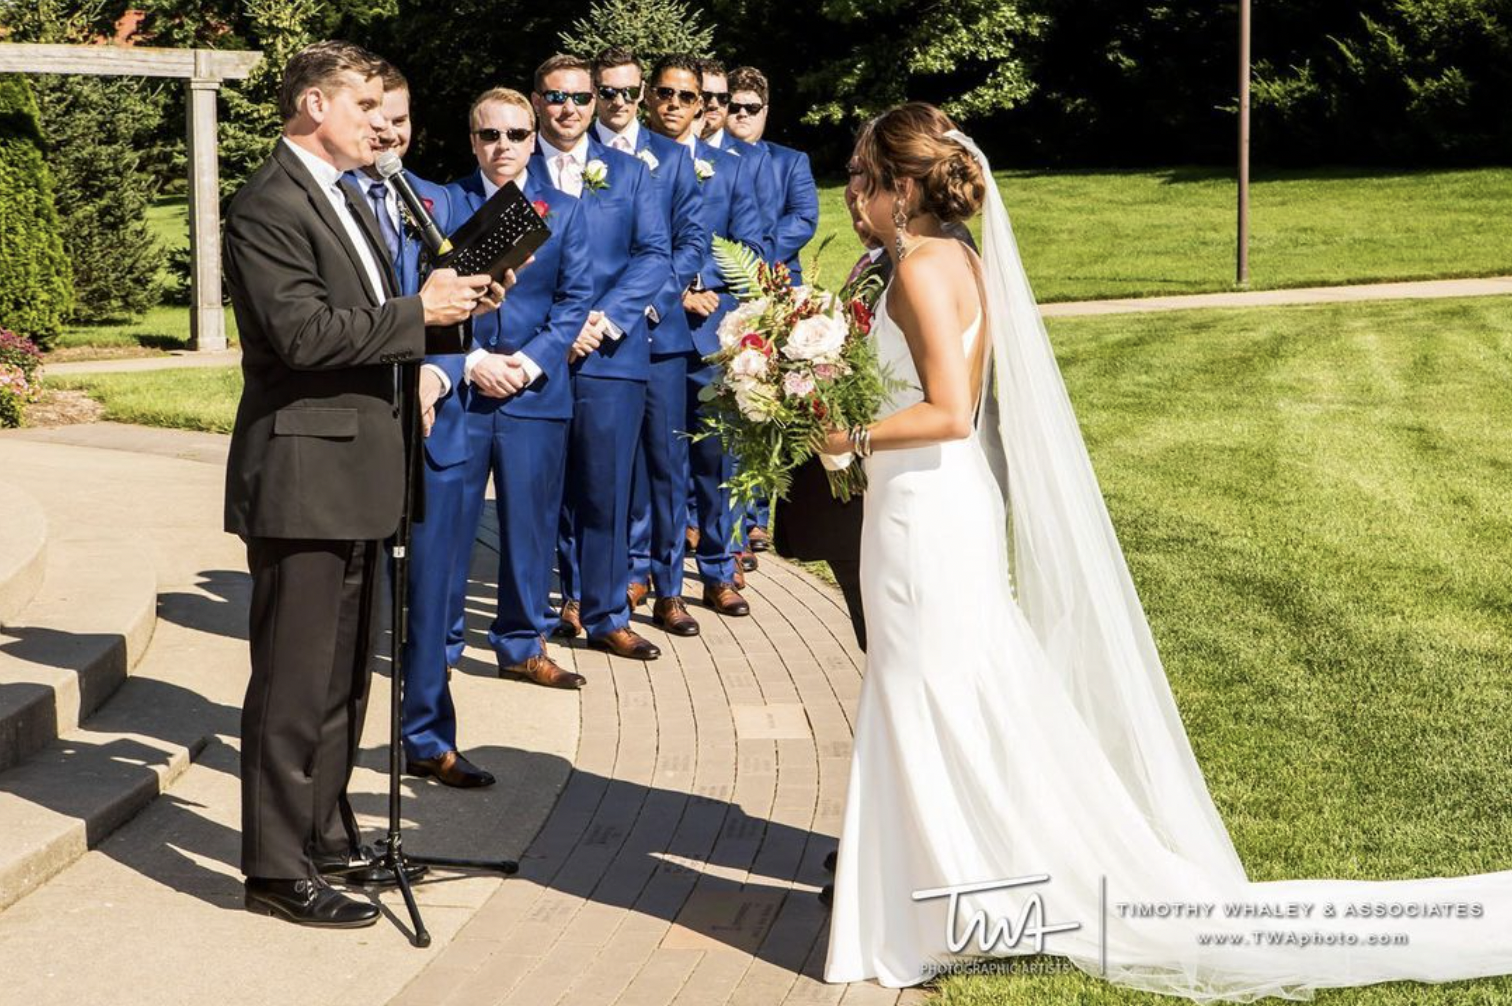 Bride and groom take their vows at outdoor wedding as groomsmen look on